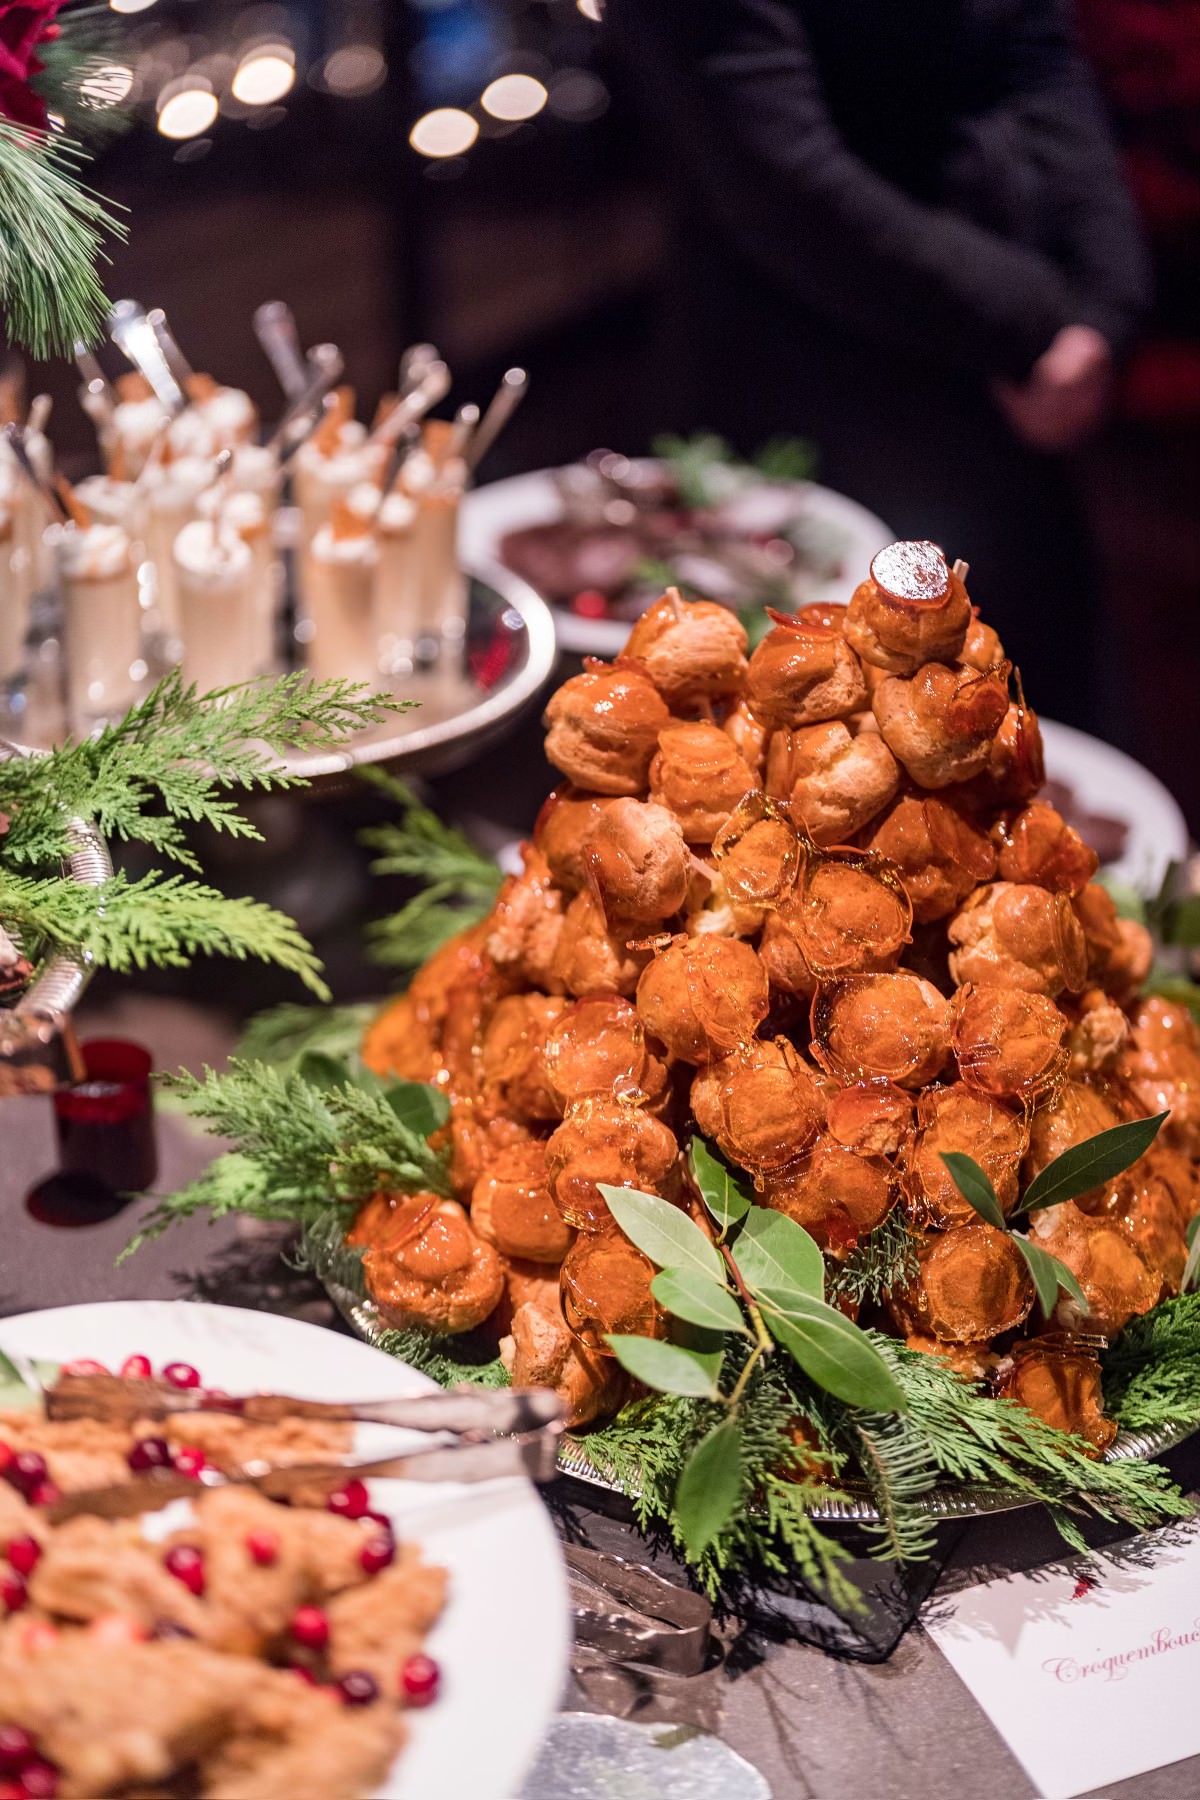 Vegan food piled artfully on bed of greens at Vegan food spread at Kourtney Kardashian Barker Christmas Eve 2022 party